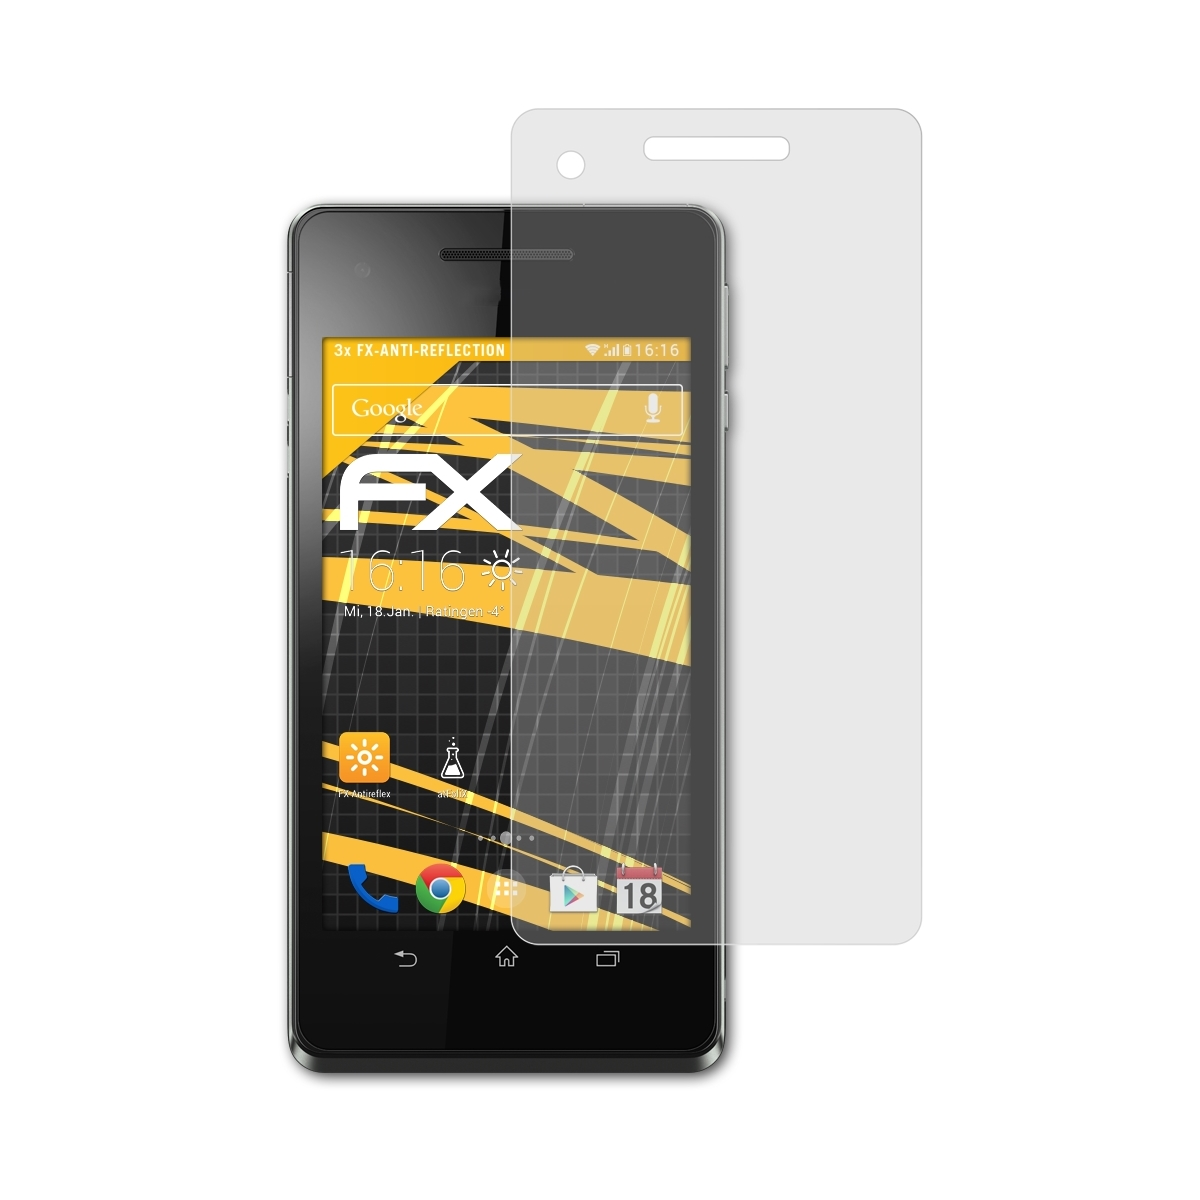 ATFOLIX 3x FX-Antireflex Xperia V) Displayschutz(für Sony